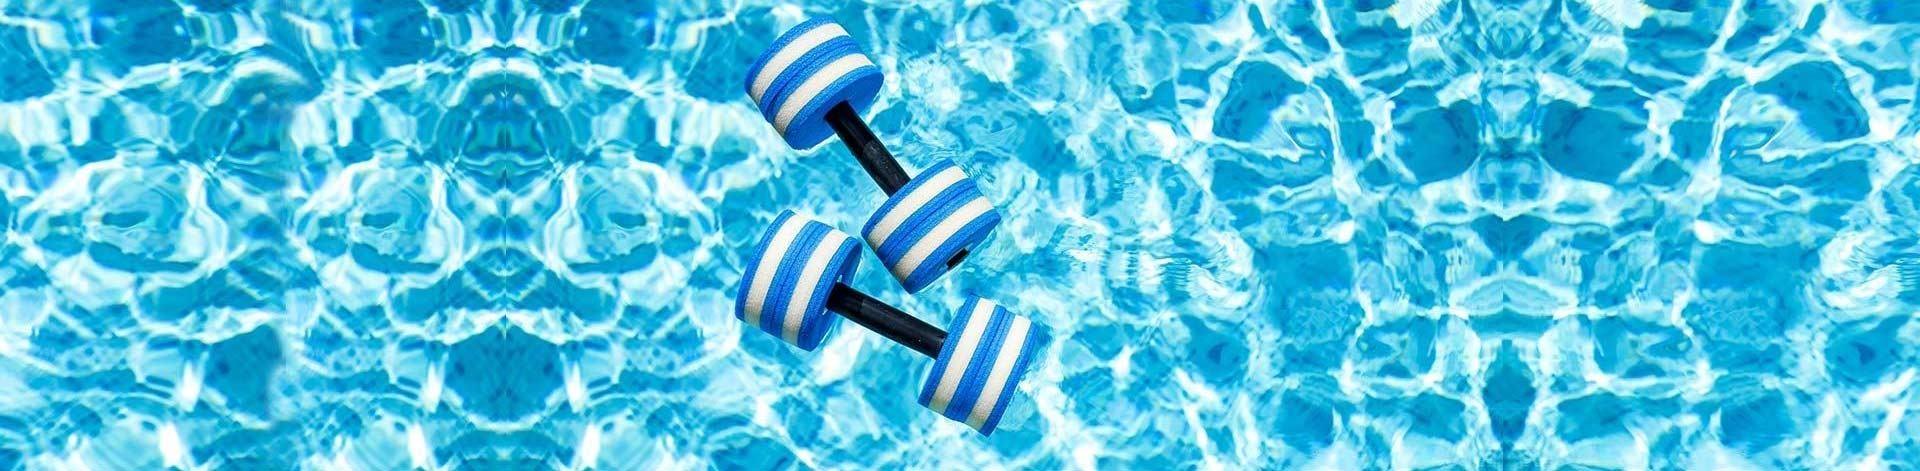 Aqua aerobic: Η απόλαυση της άσκησης στο νερό